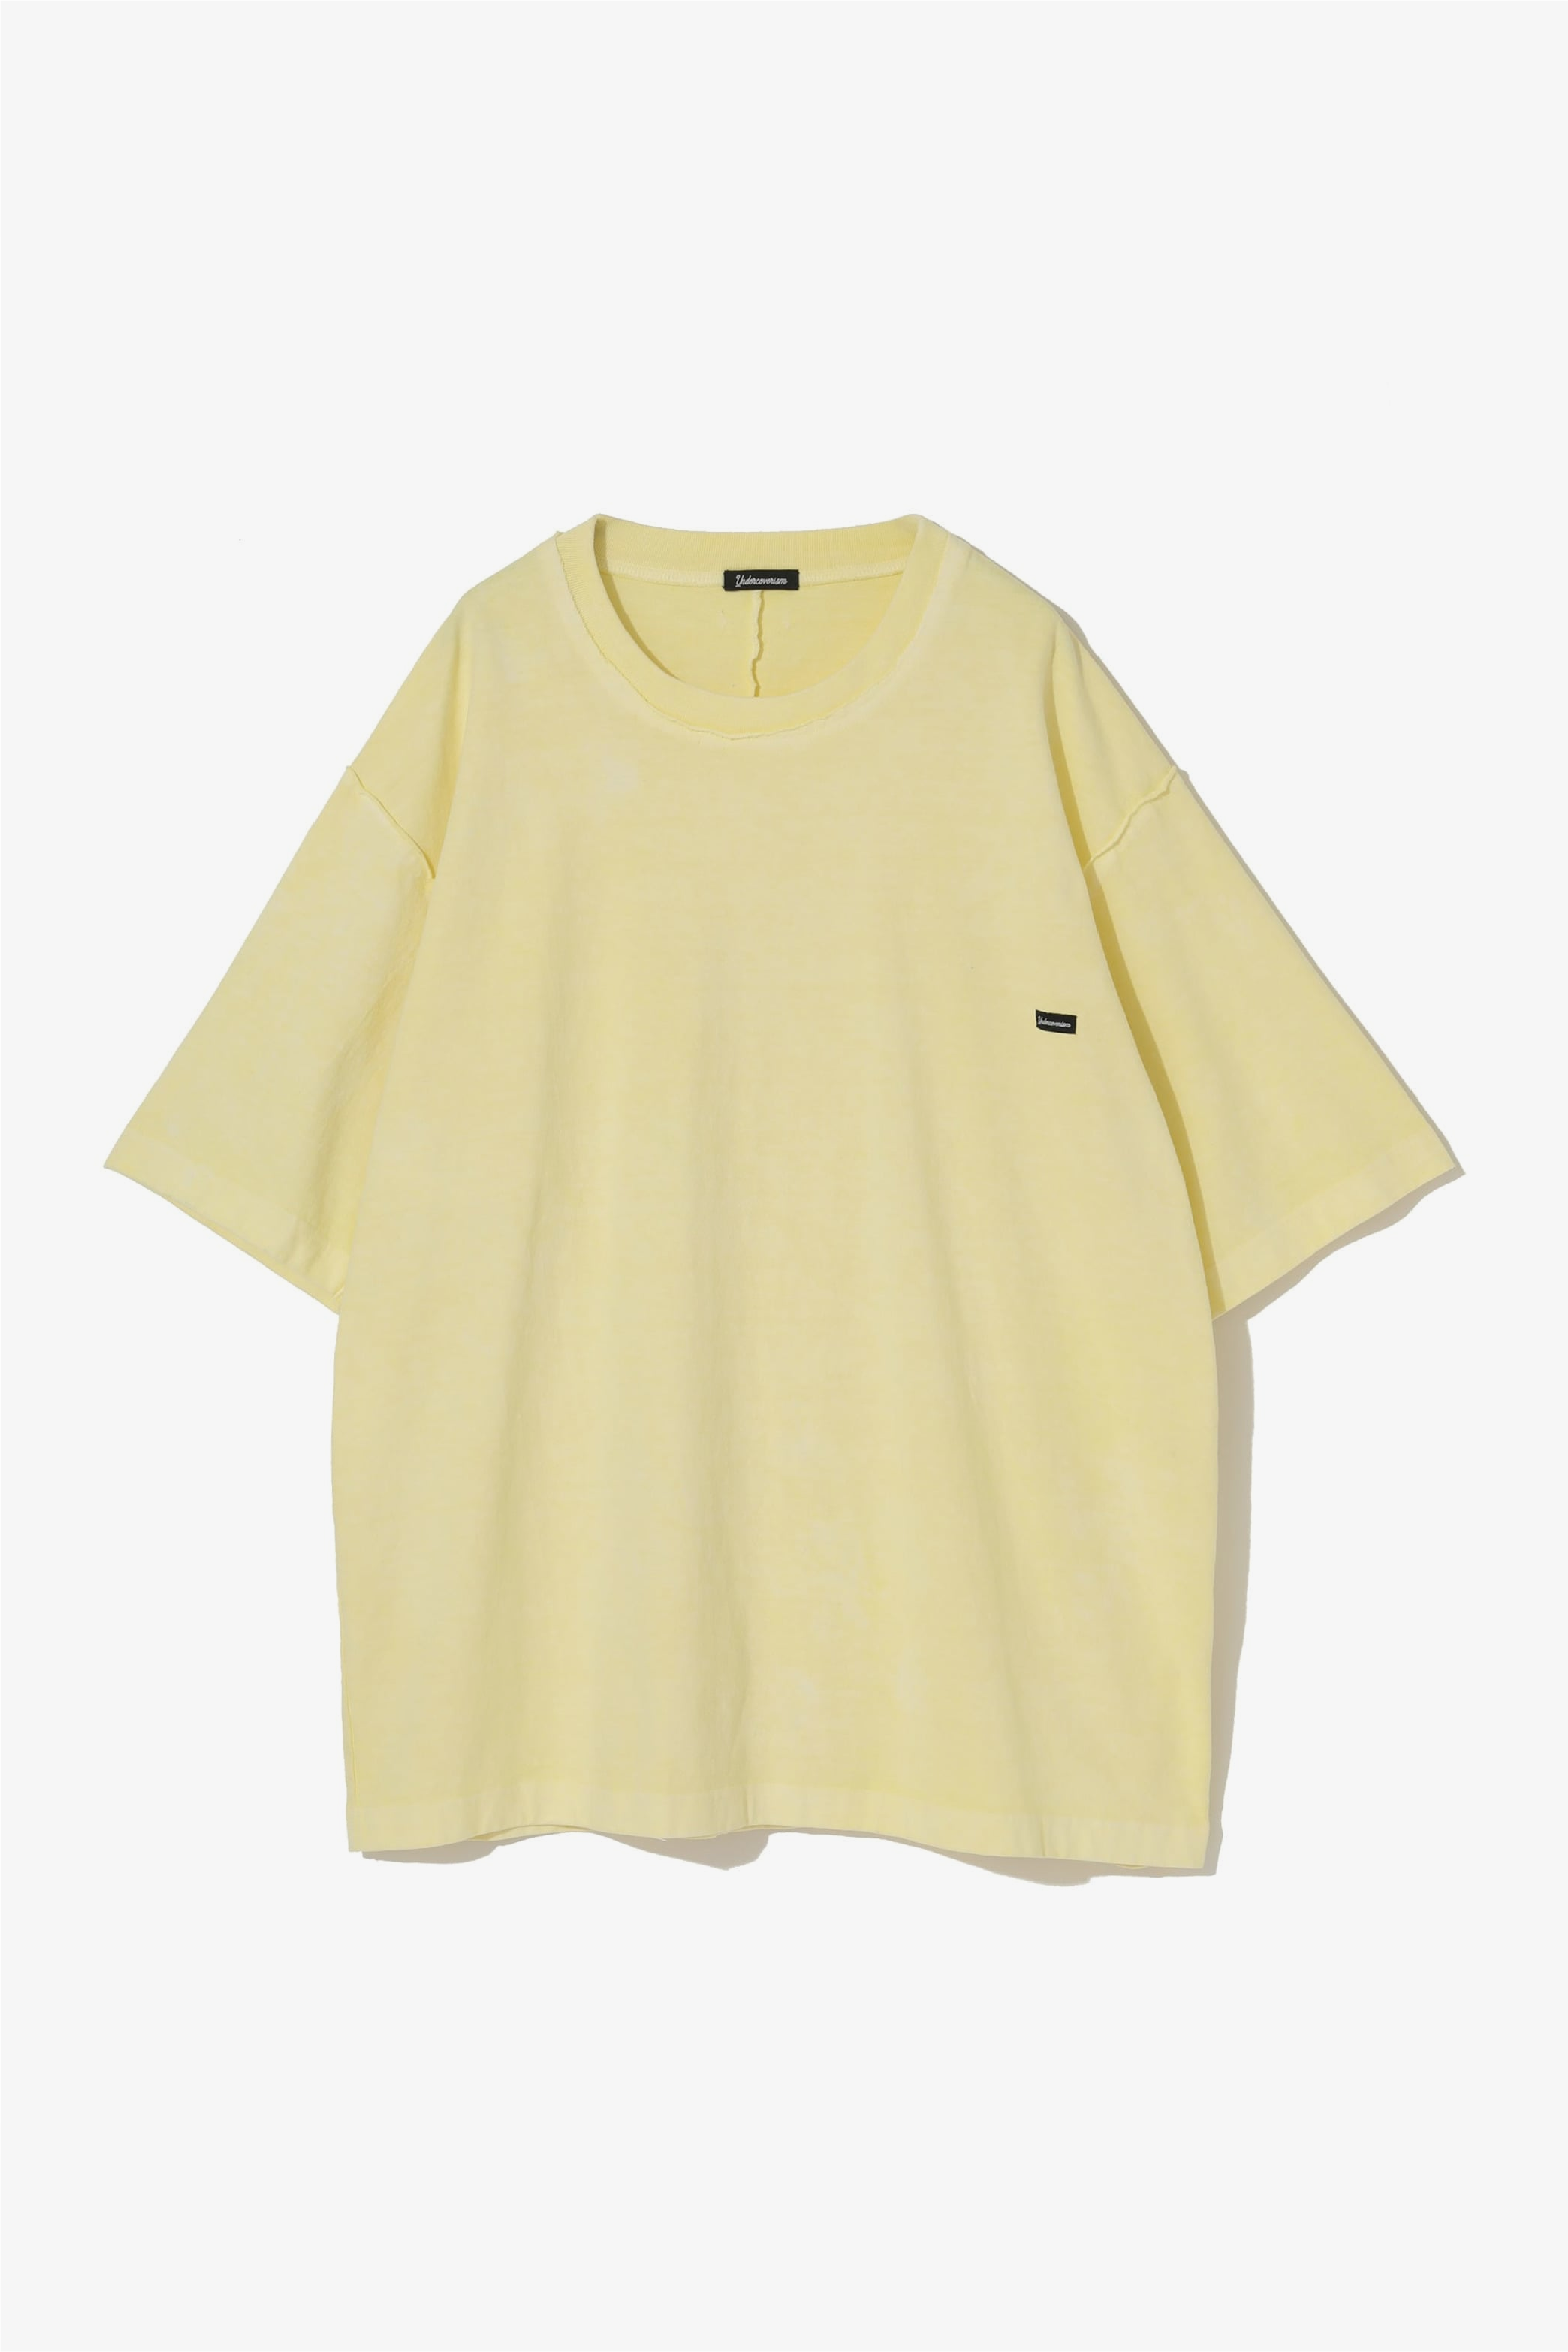 Selectshop FRAME - UNDERCOVER T-Shirts T-Shirts Dubai